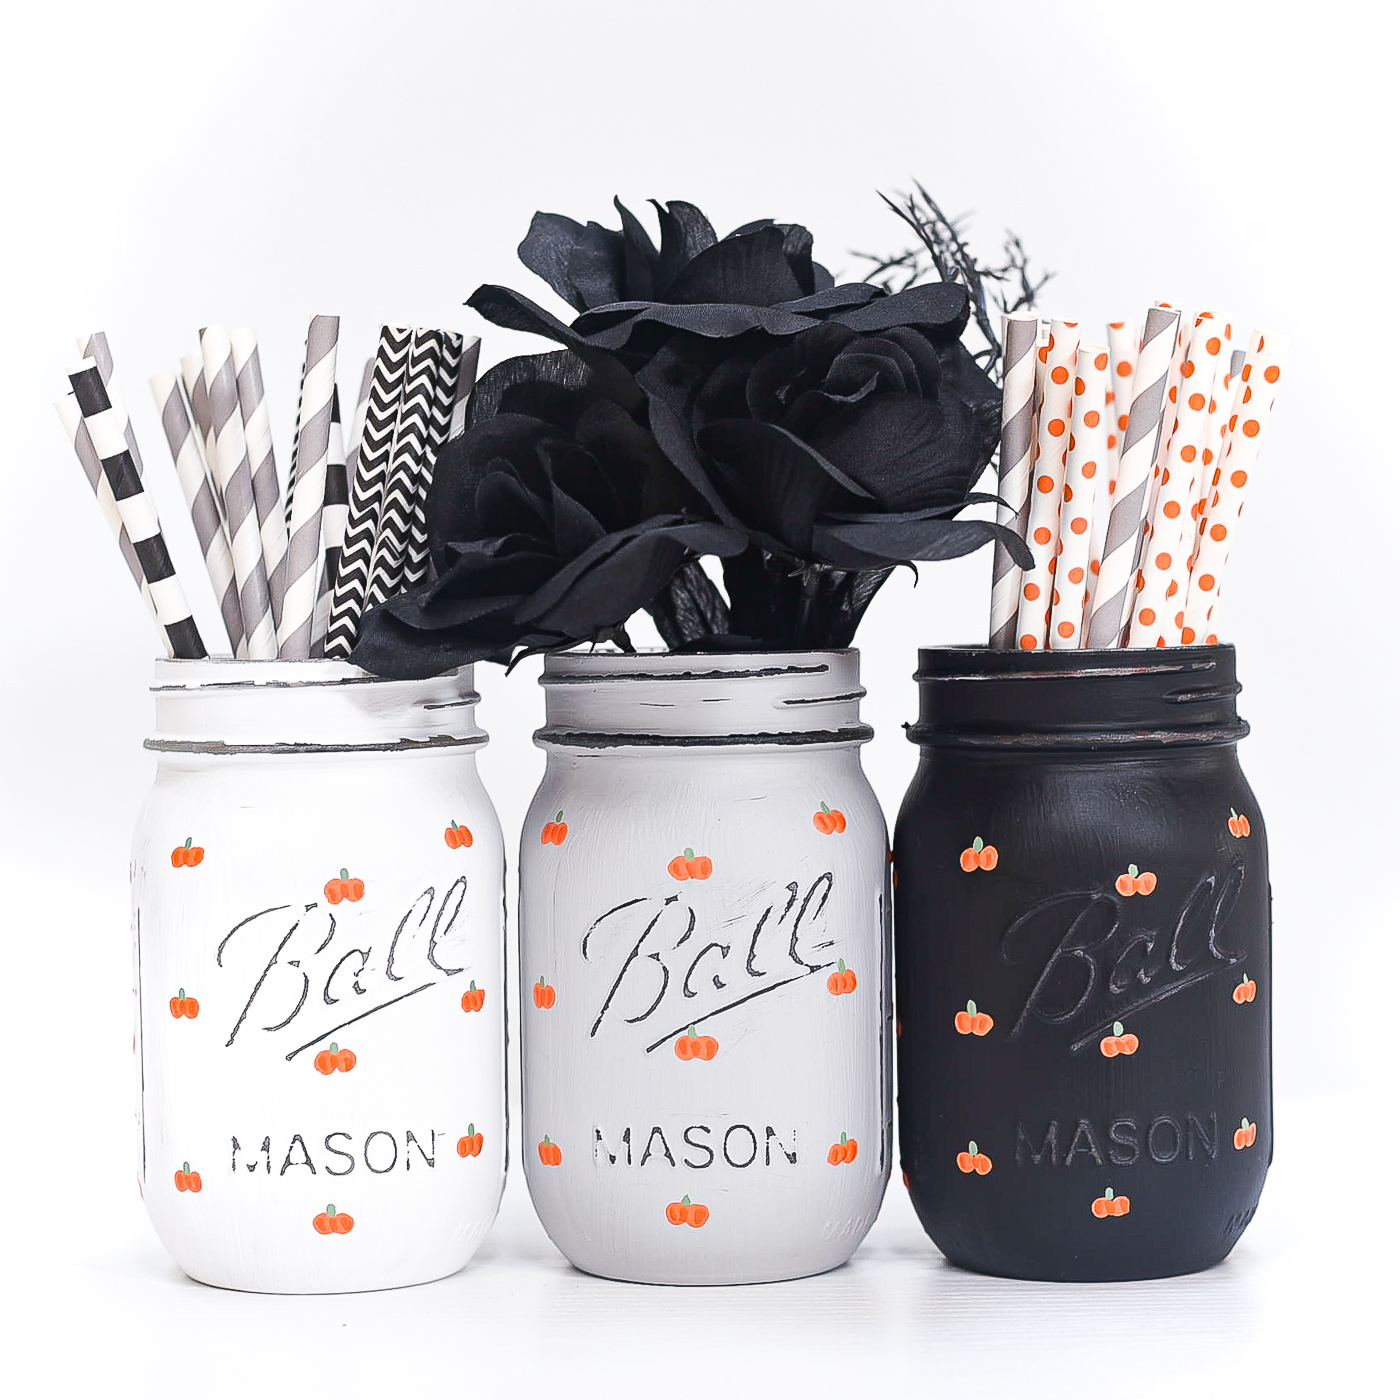 Painted Pumpkins on Mason Jars - Fall Mason Jar Craft Ideas with Paint